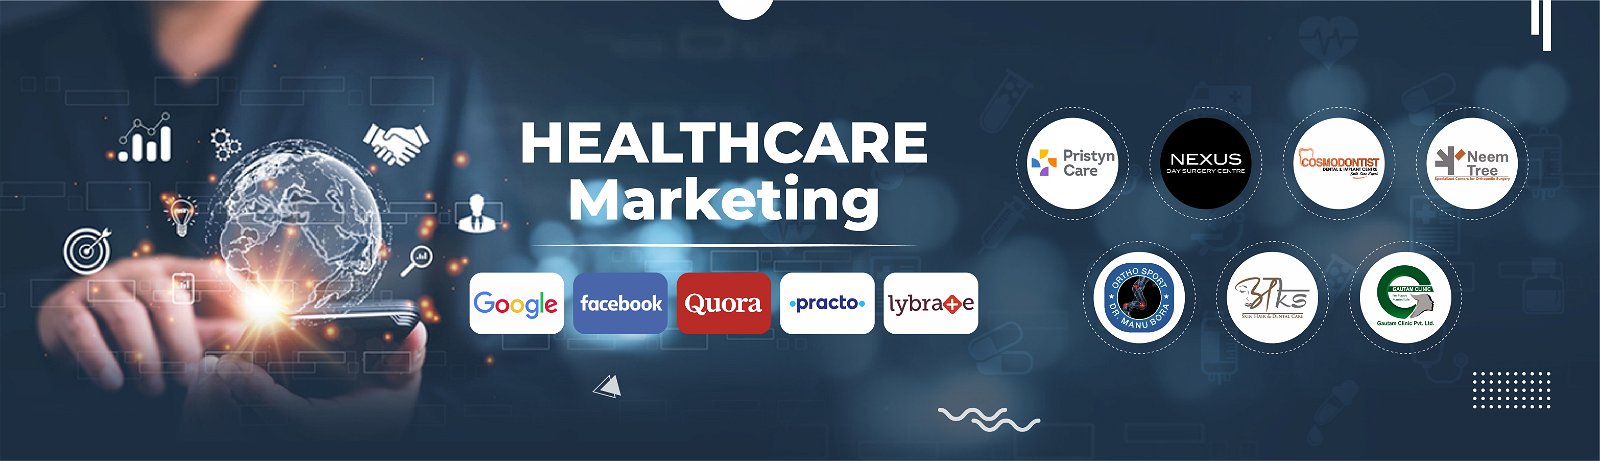 healthcar marketing agency